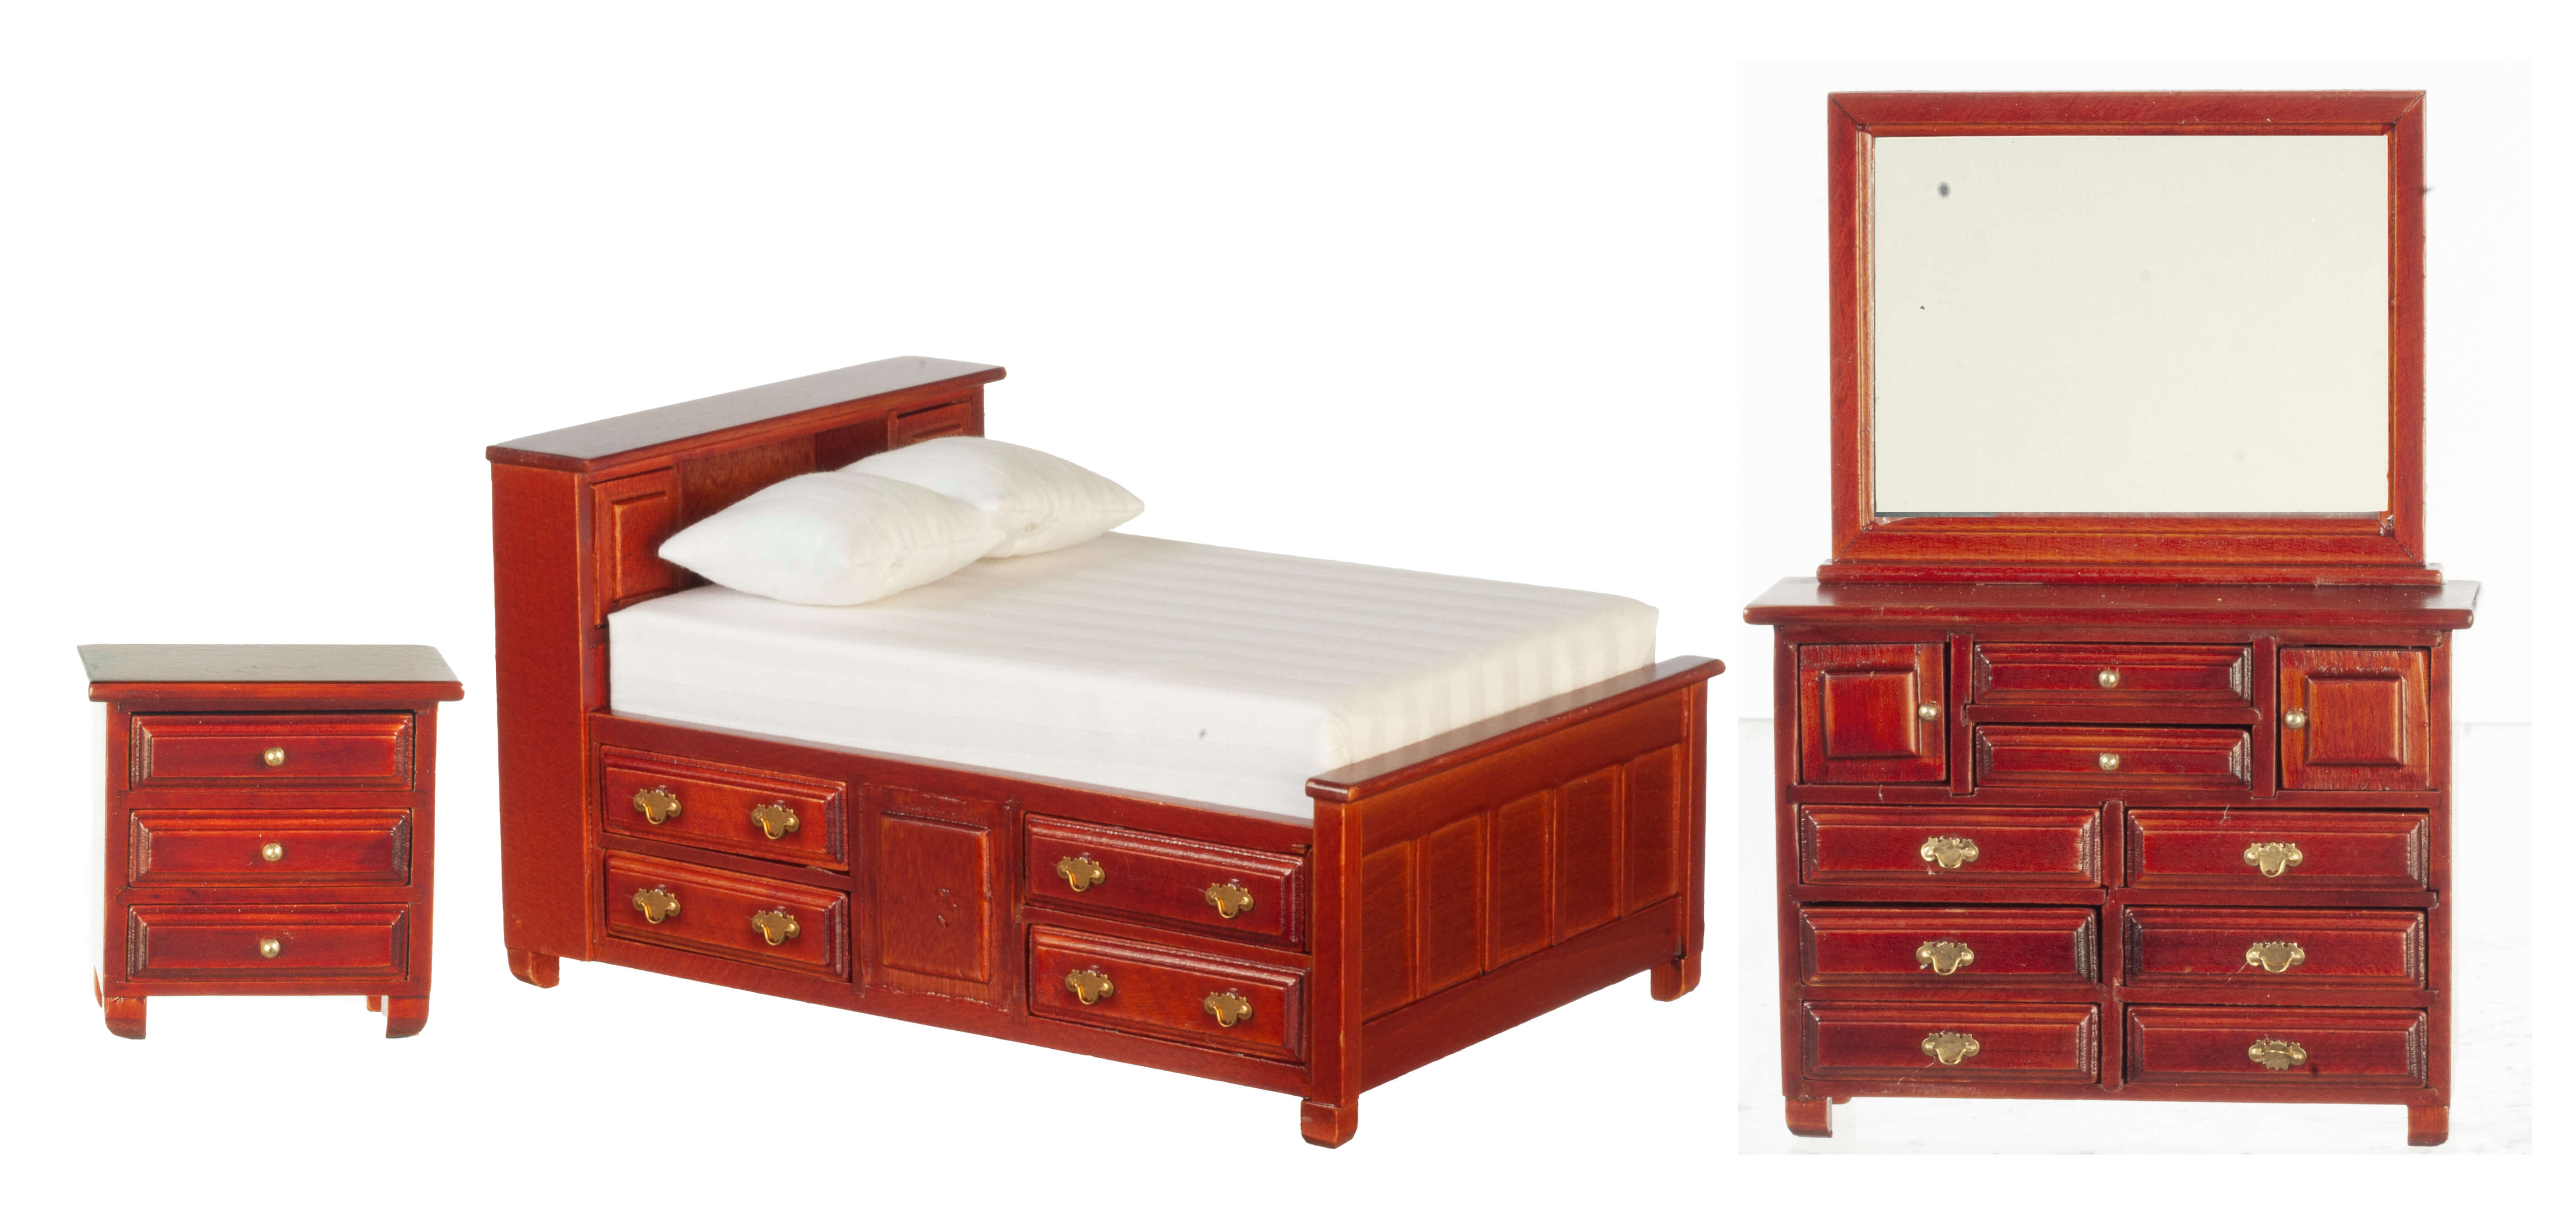 Double Bedroom Furniture Set - Mahogany - 3pc